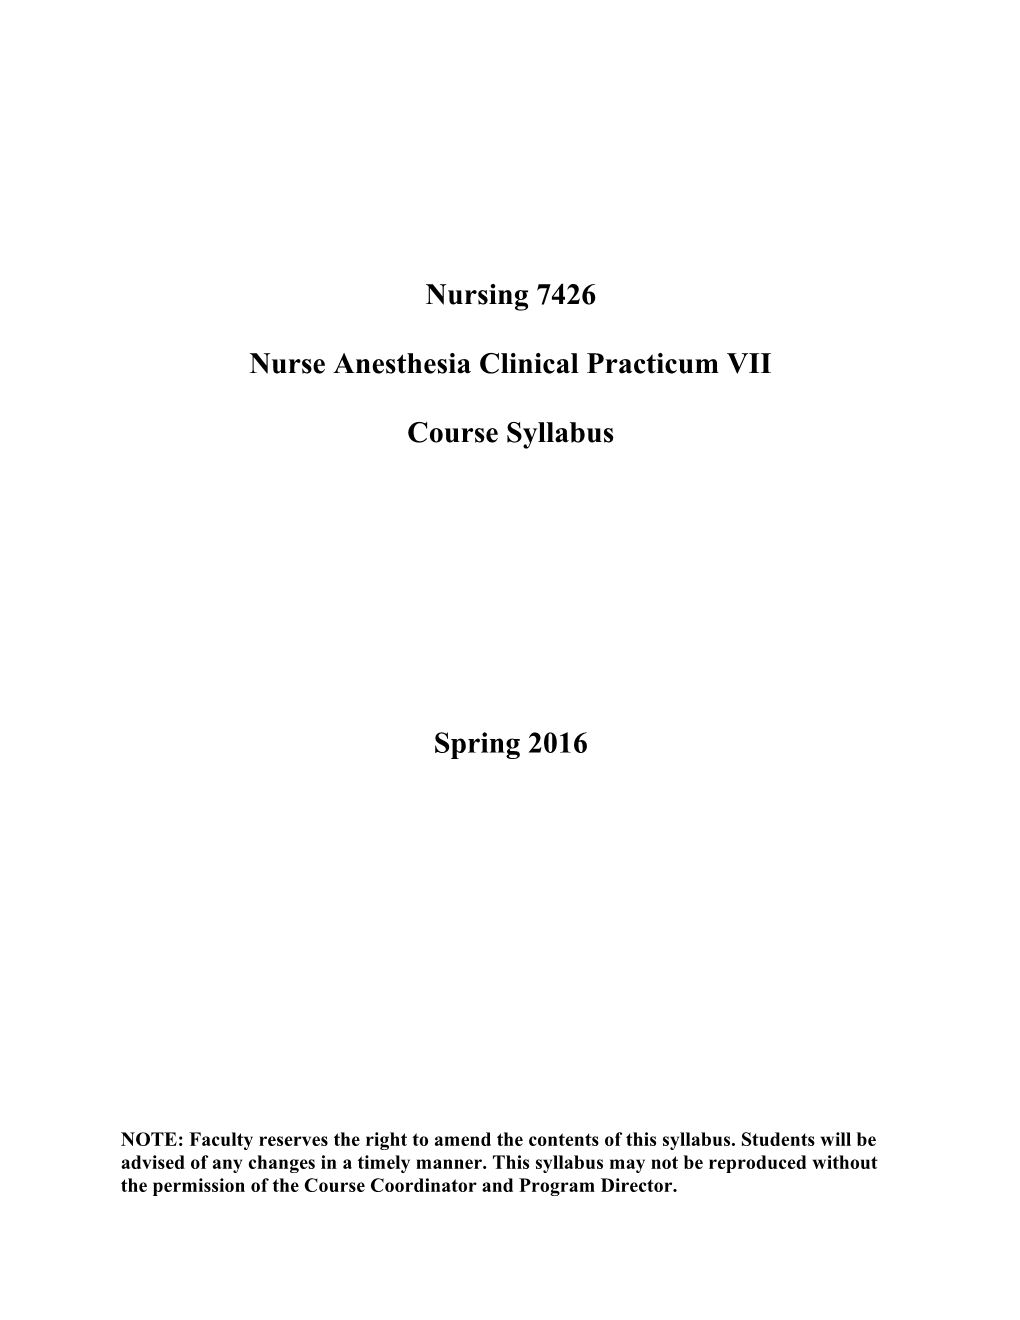 Nurse Anesthesia Clinical Practicum VII